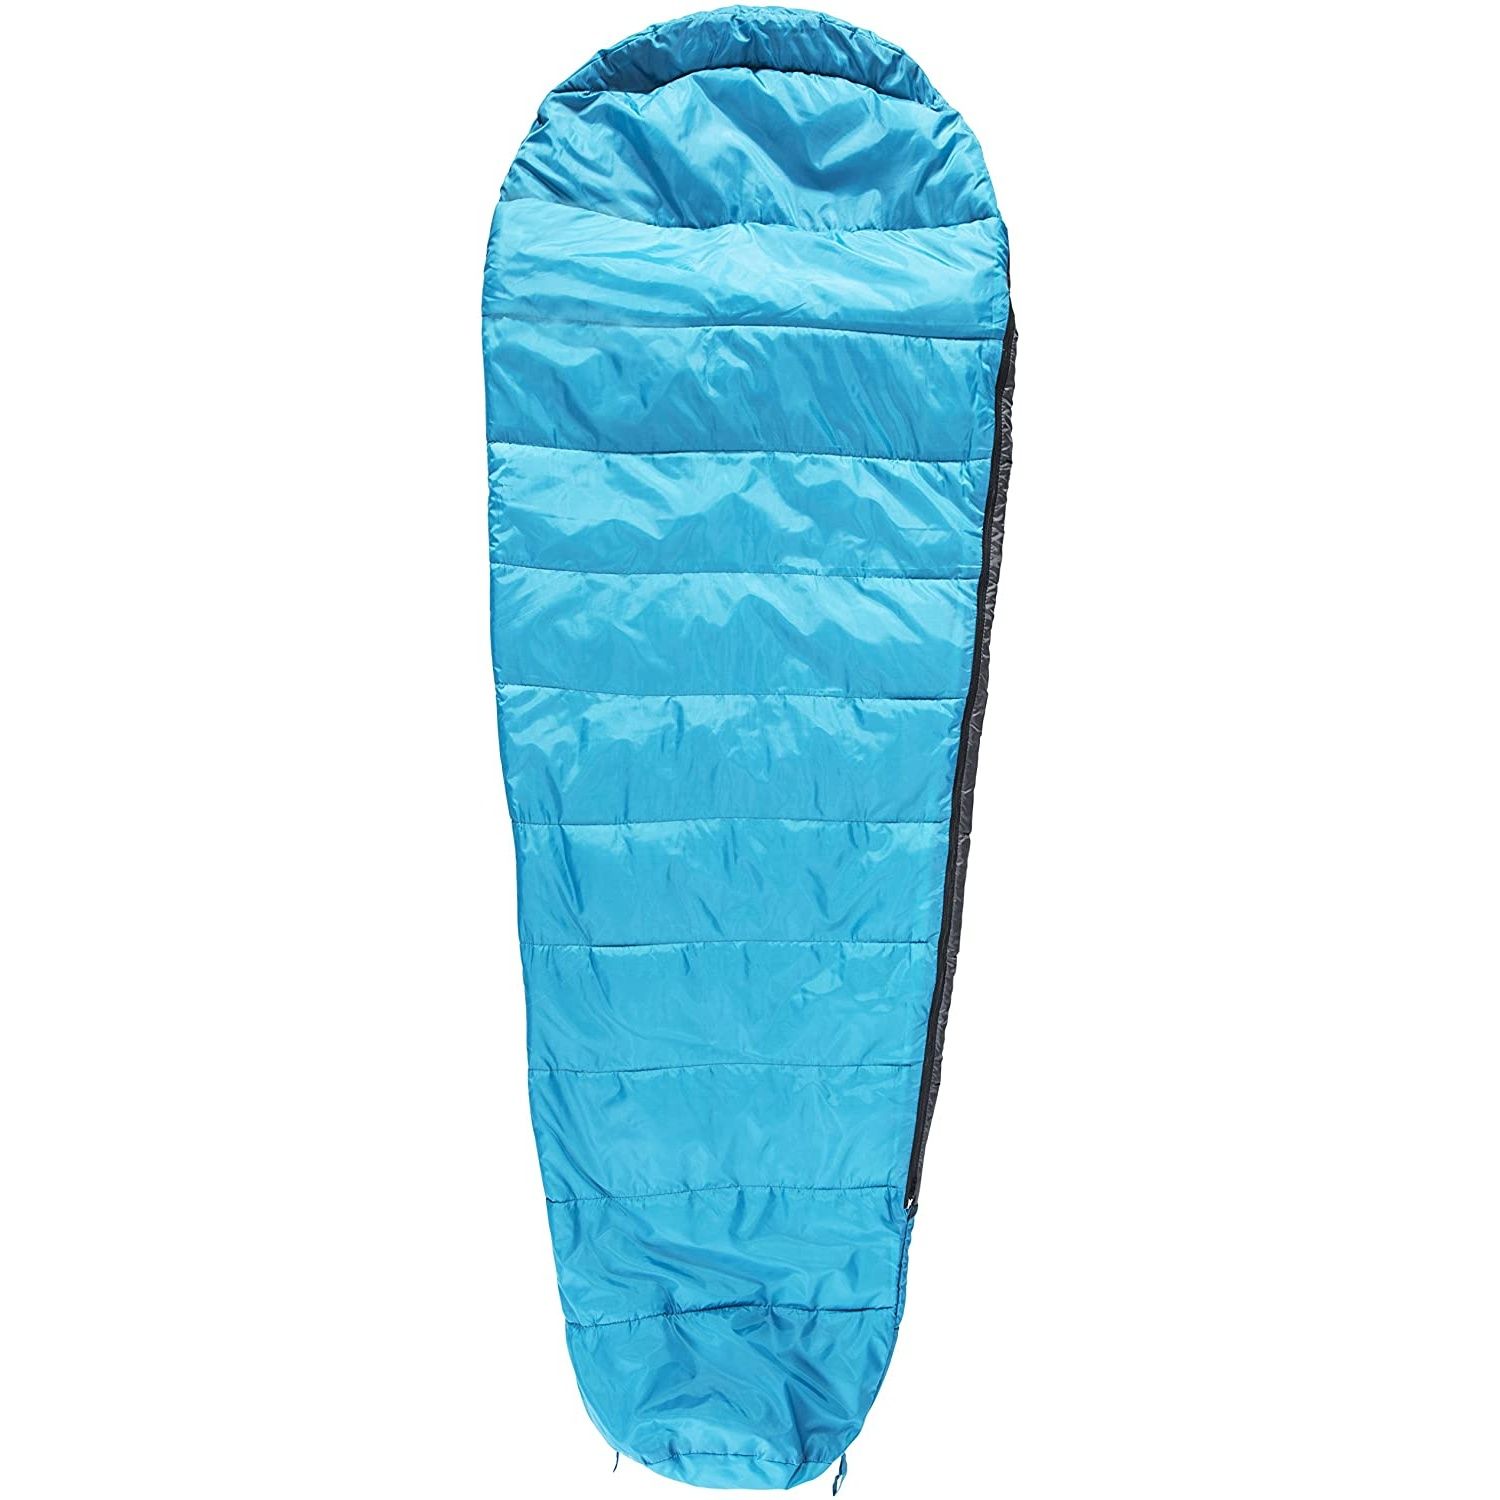 2 Season sleeping bag. Size: 230 x 85 x 55cm. Water repellent polyester shell & lightweight polycotton hollowfibre filling. 2 Way zipper.